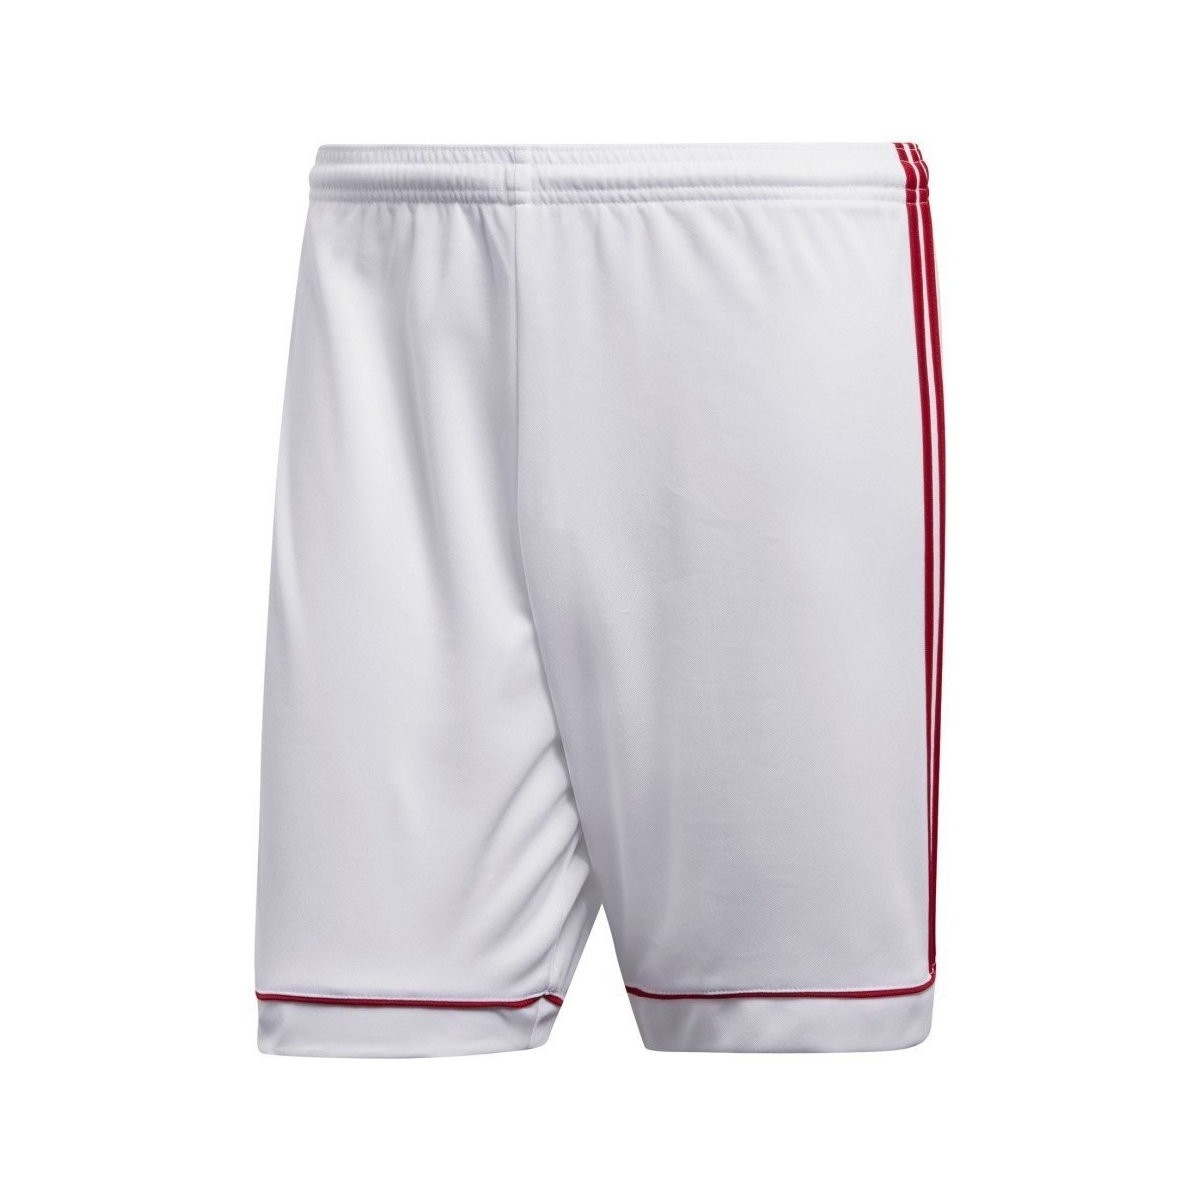 Abbigliamento Unisex bambino Shorts / Bermuda adidas Originals Short Junior Squadra 17 Bianco